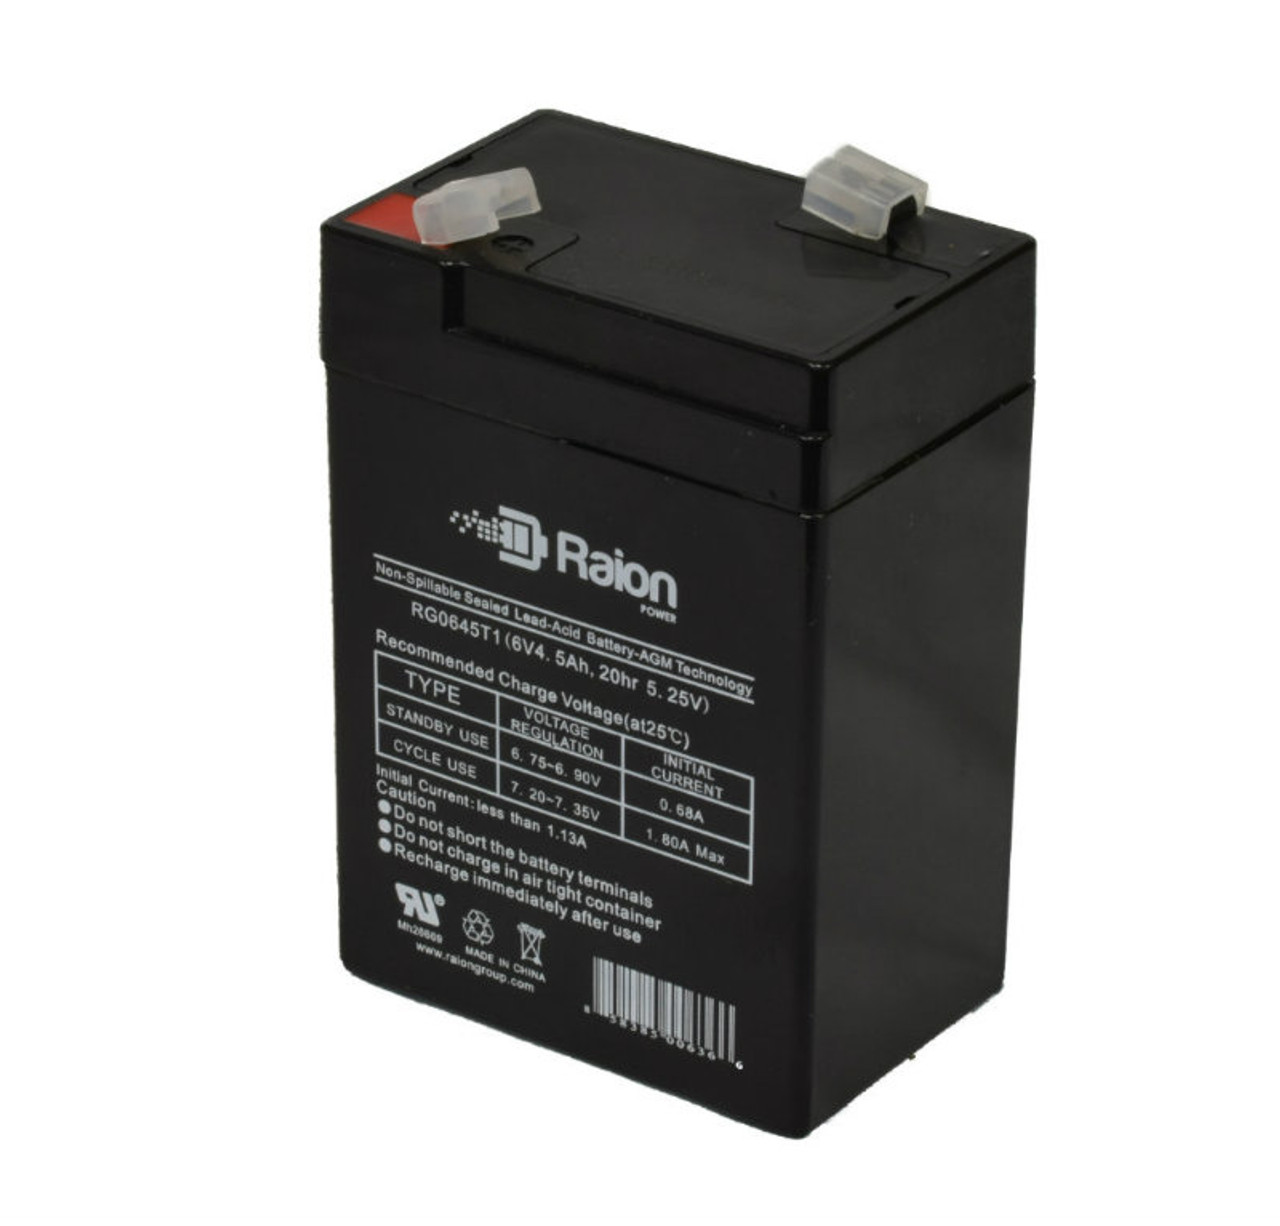 Raion Power RG0645T1 6V 4.5Ah Replacement Battery Cartridge for Telong TL660